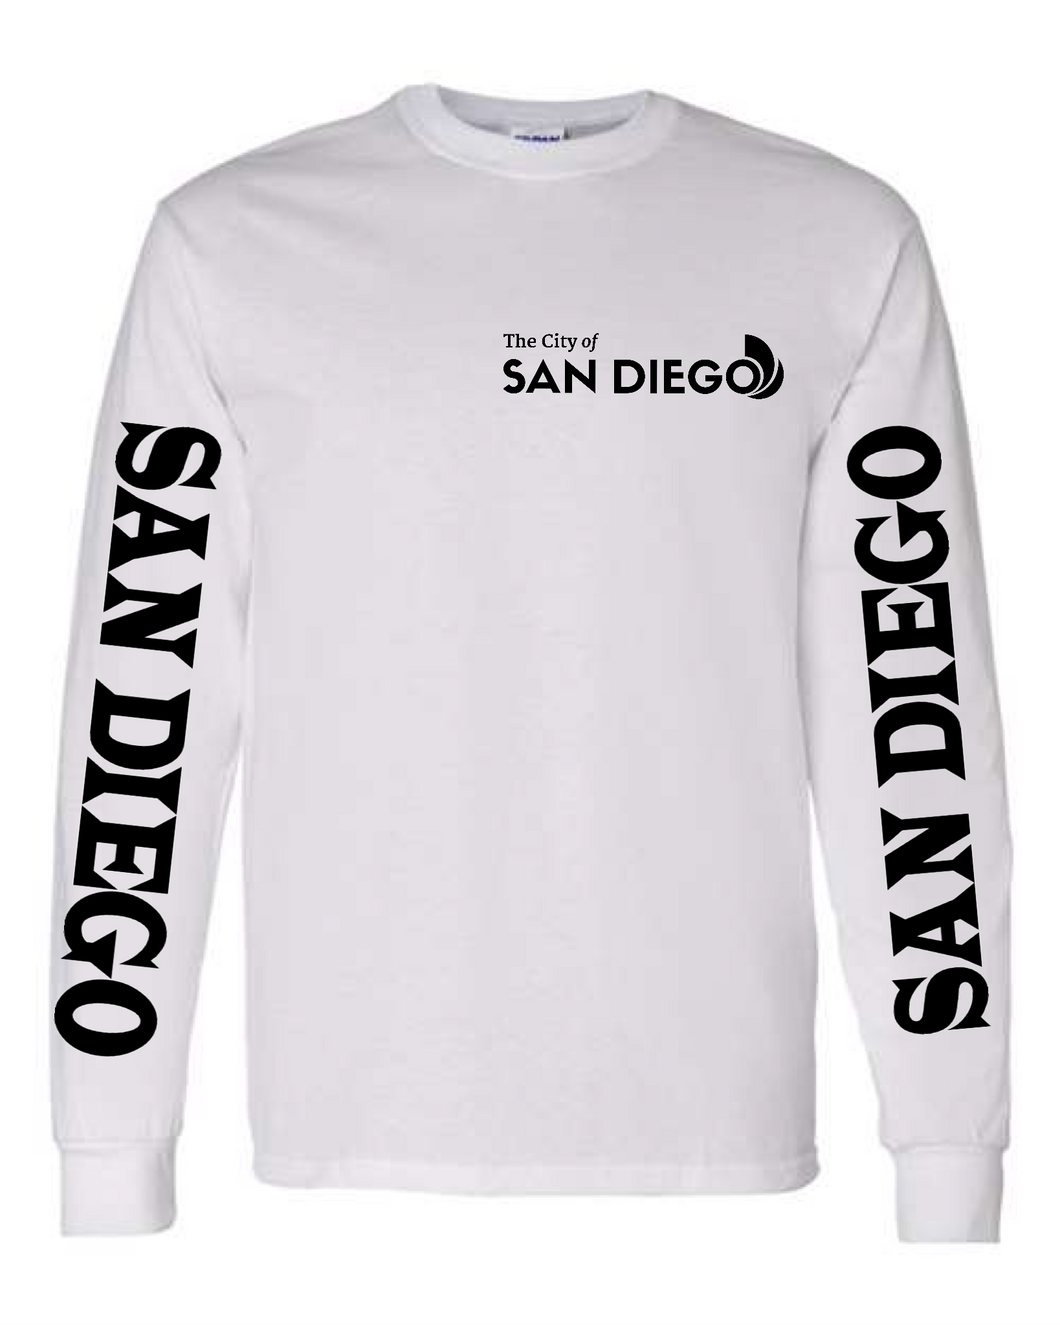 City of San Diego Long Sleeve (Basic Design)